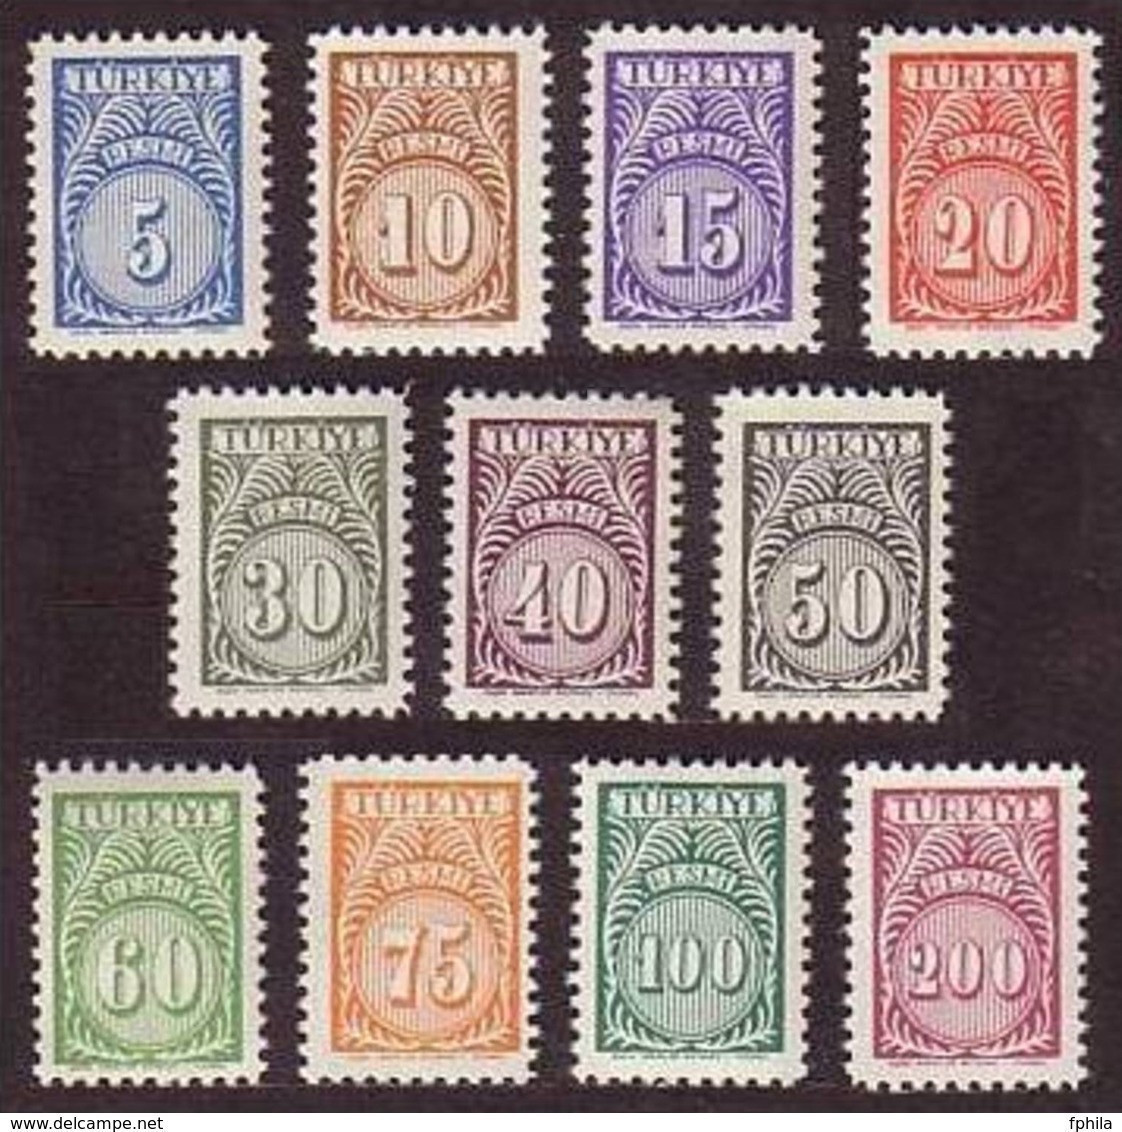 1957 TURKEY OFFICIAL STAMPS MNH ** - Dienstzegels